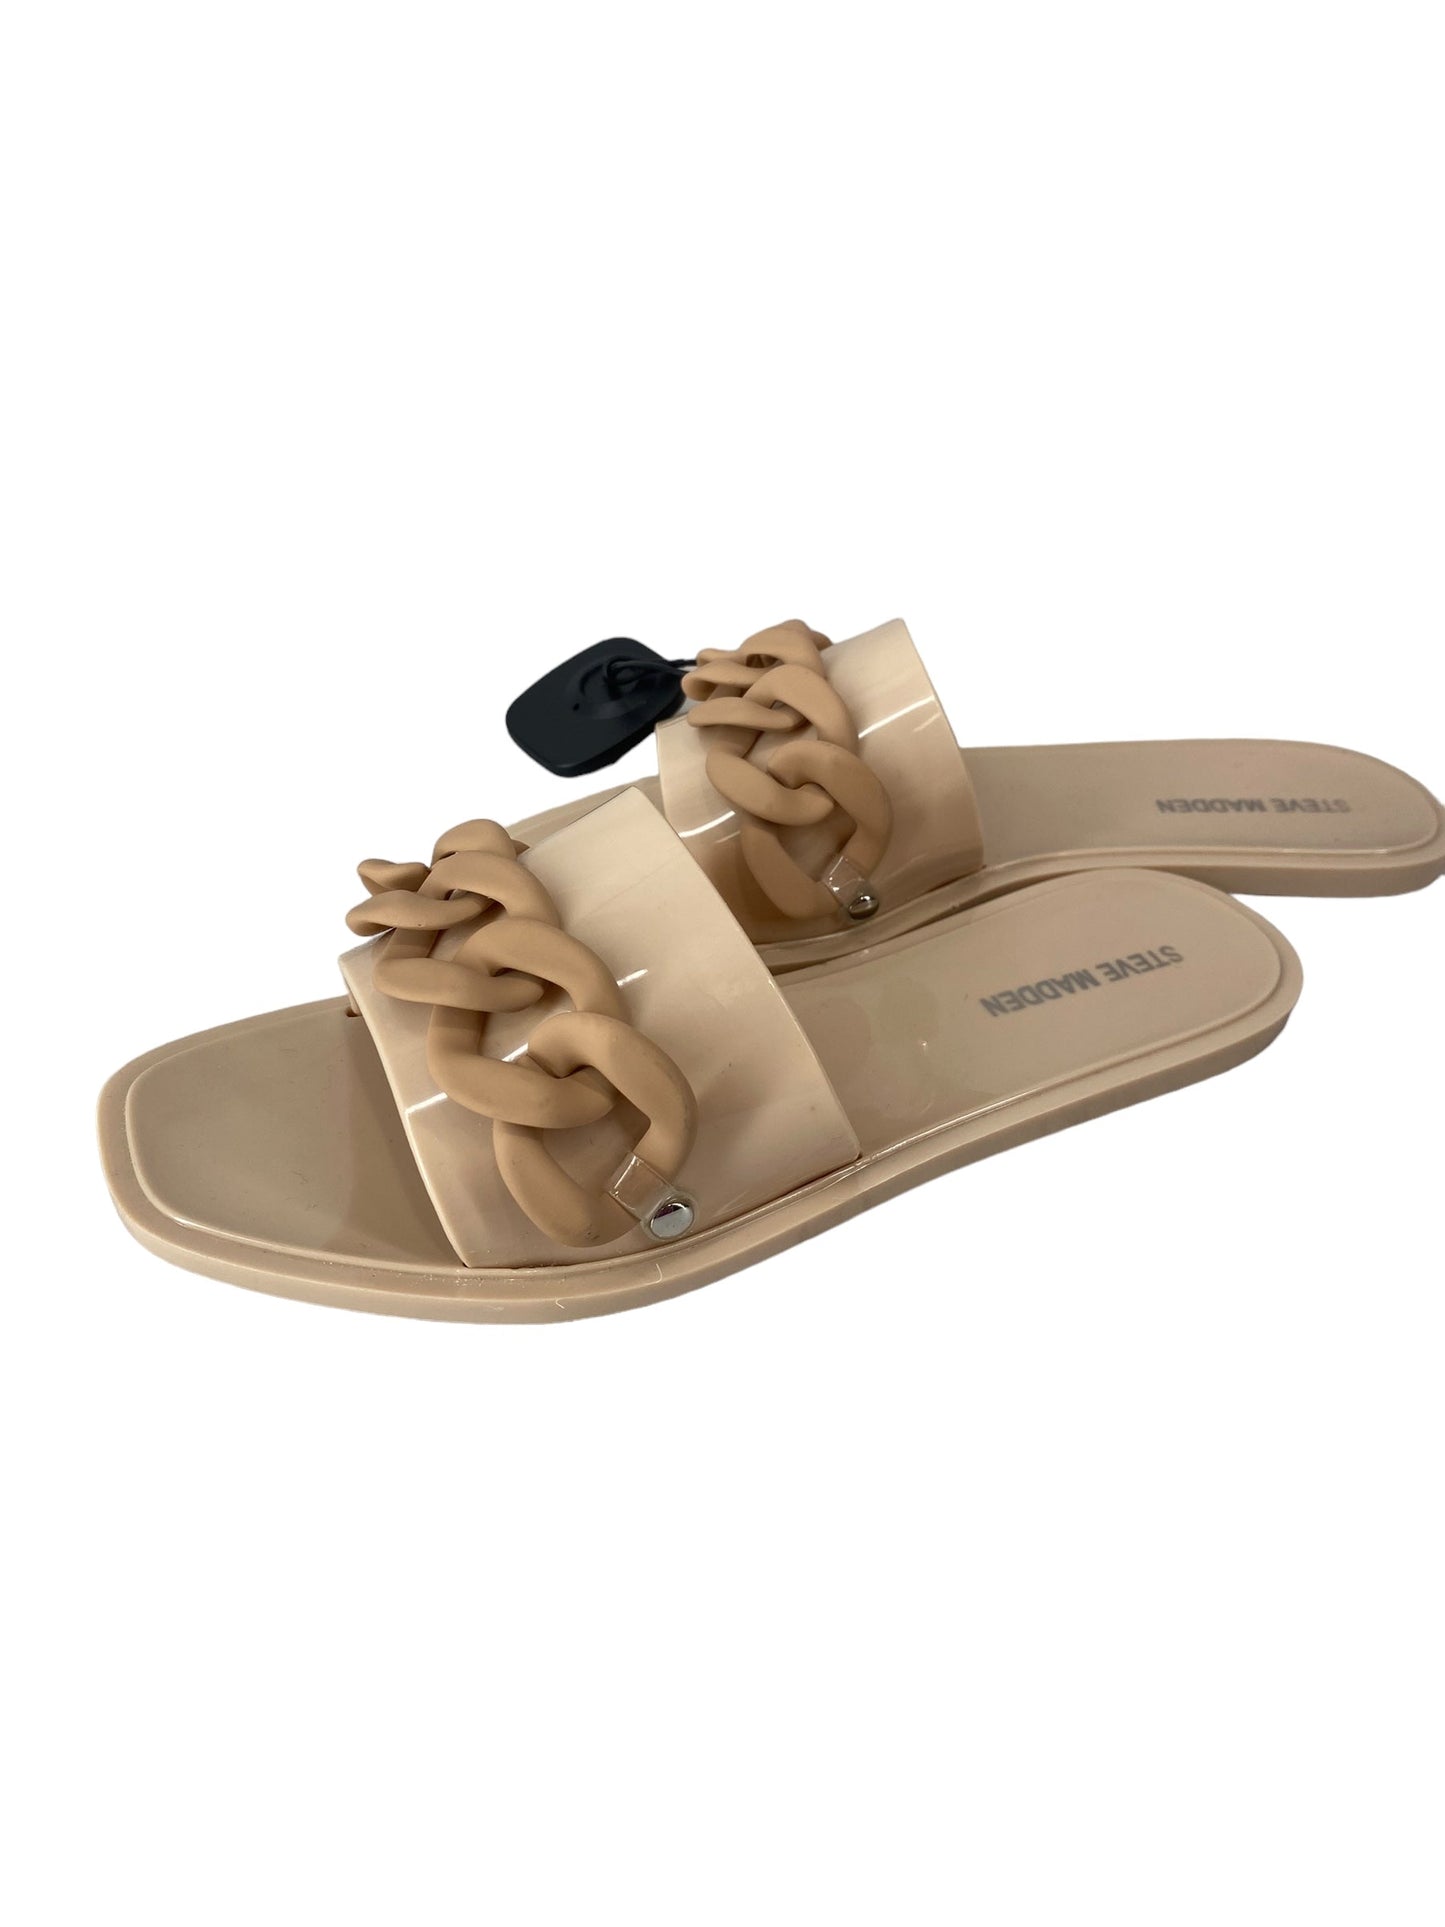 Tan Sandals Flip Flops Steve Madden, Size 7